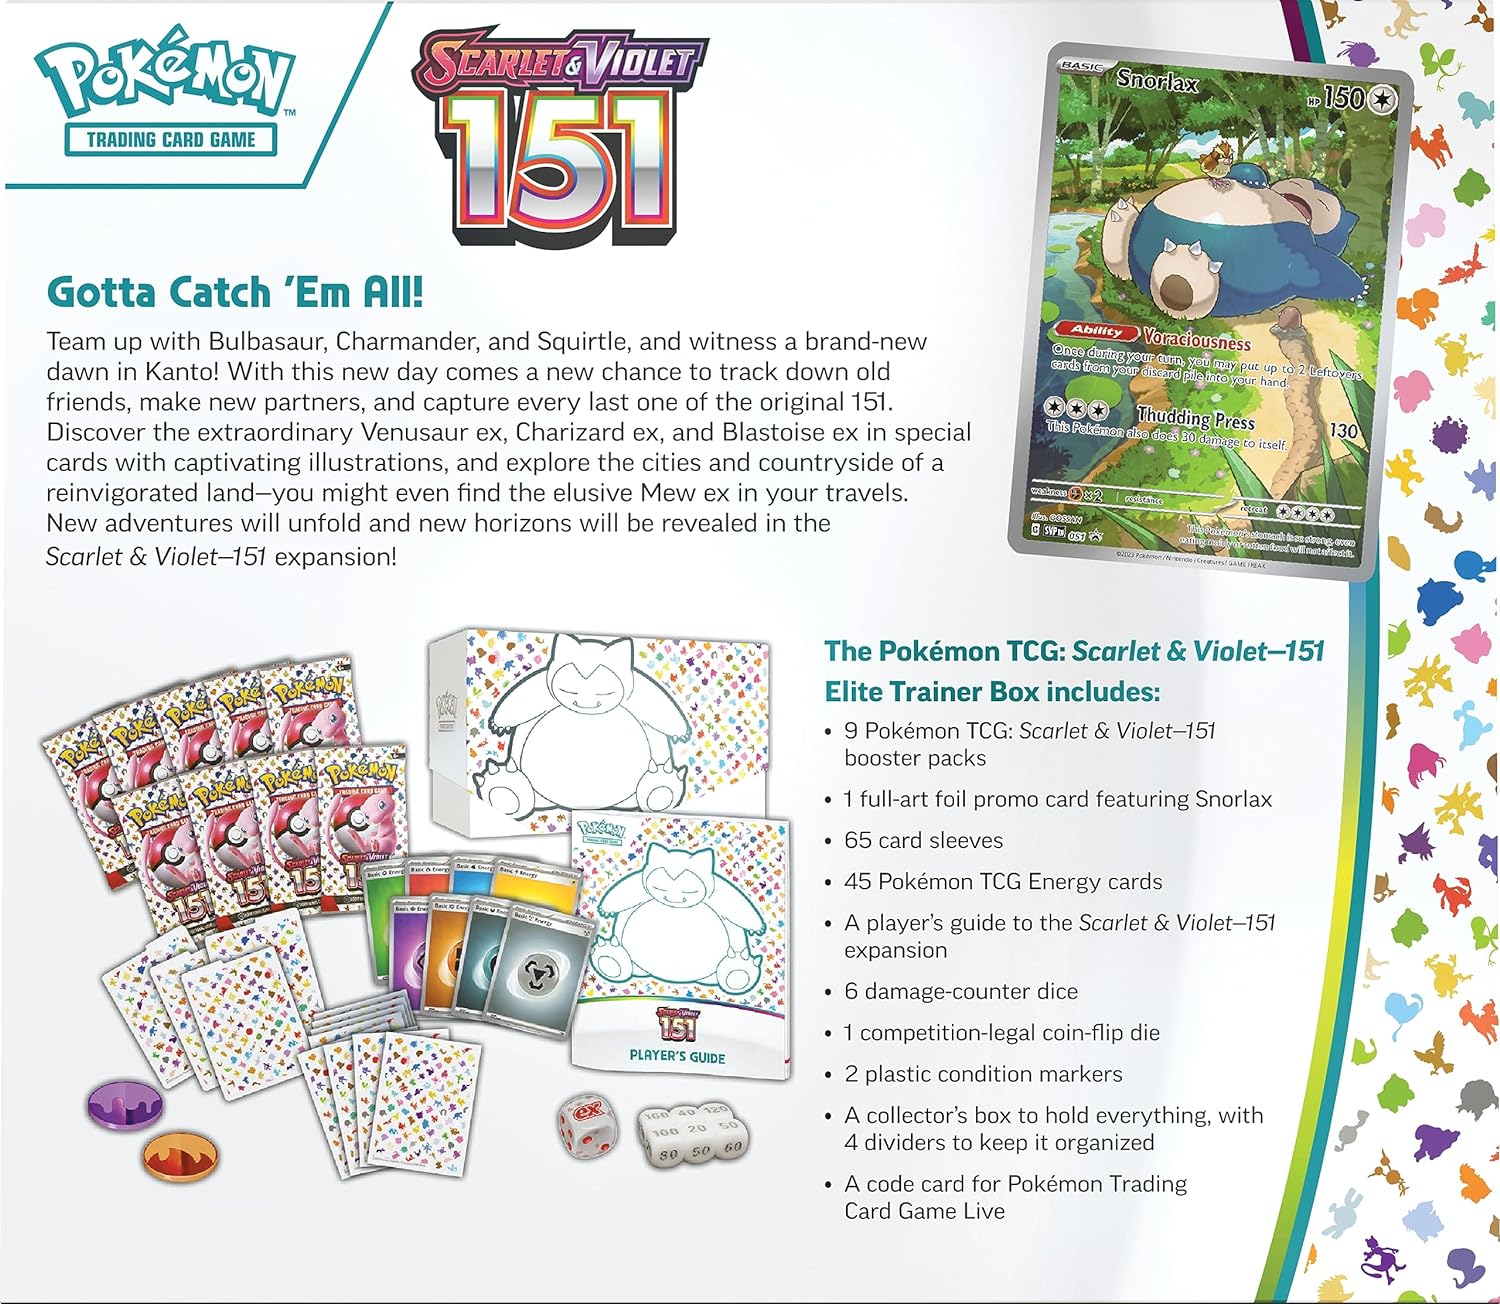 Pokemon Trading Card Games Scarlet & Violet 3.5 151 Elite Trainer Box 9 Booster Packs Included - image 3 of 3